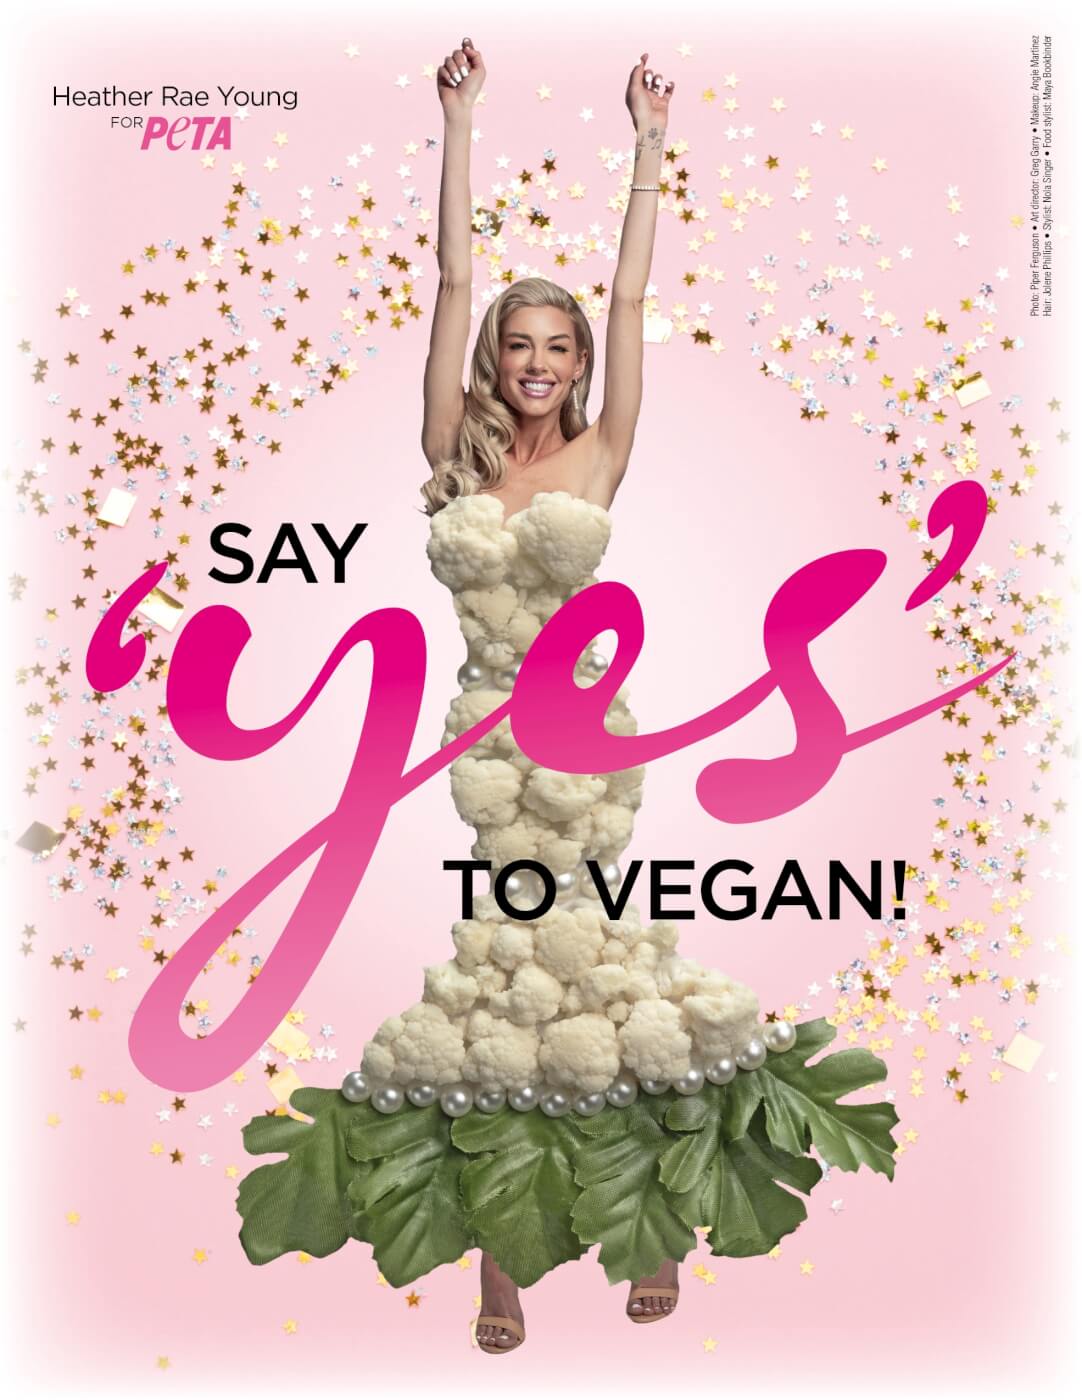 Heather Rae Young in Vegan Ad for PETA